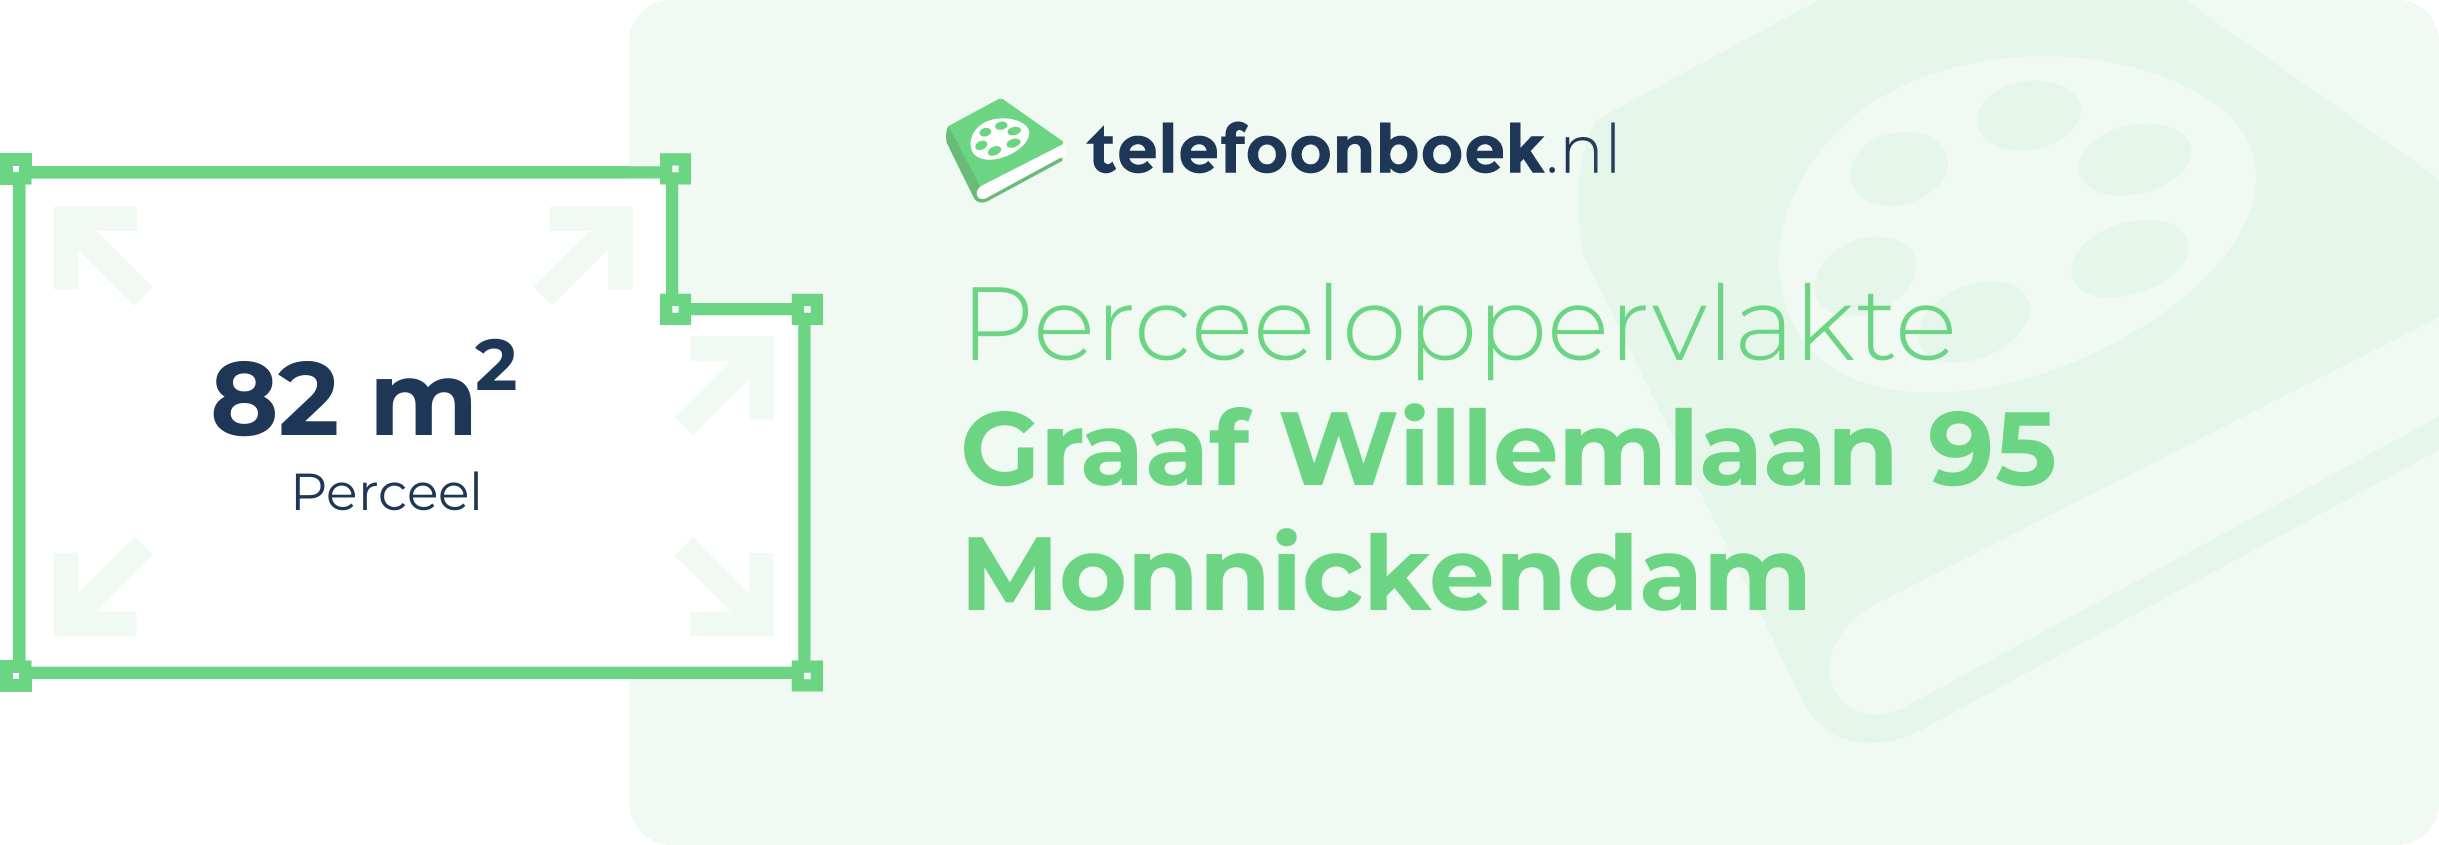 Perceeloppervlakte Graaf Willemlaan 95 Monnickendam